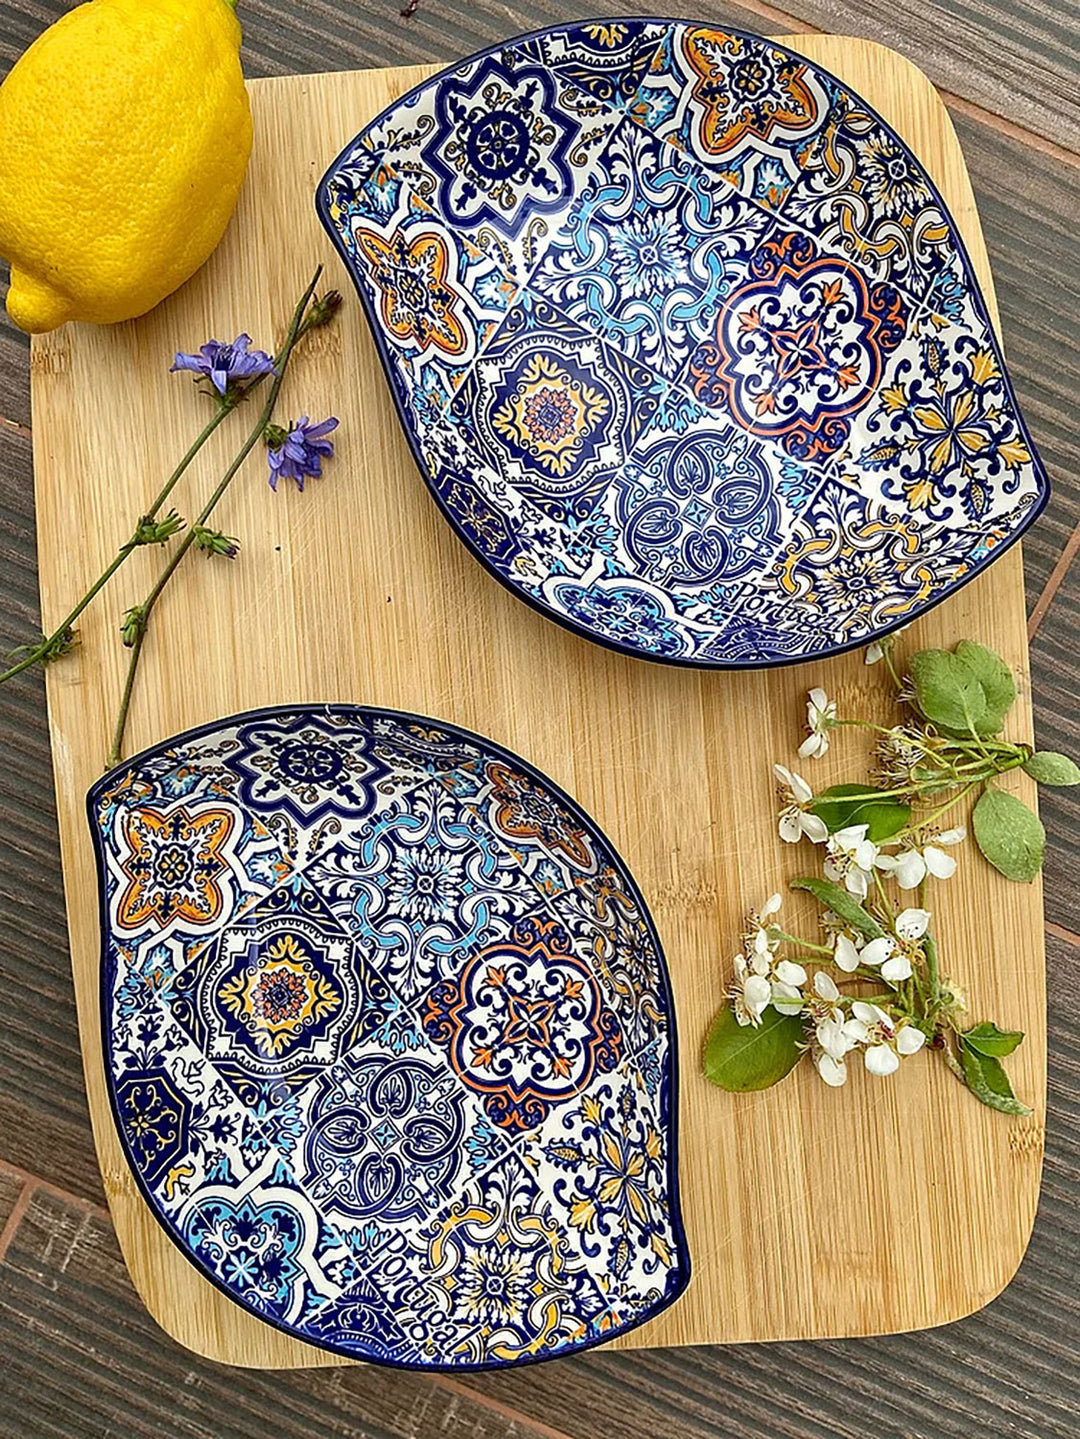 Portuguese Pottery Alcobaça Ceramic Side Dish Serving Bowl - Set of 2